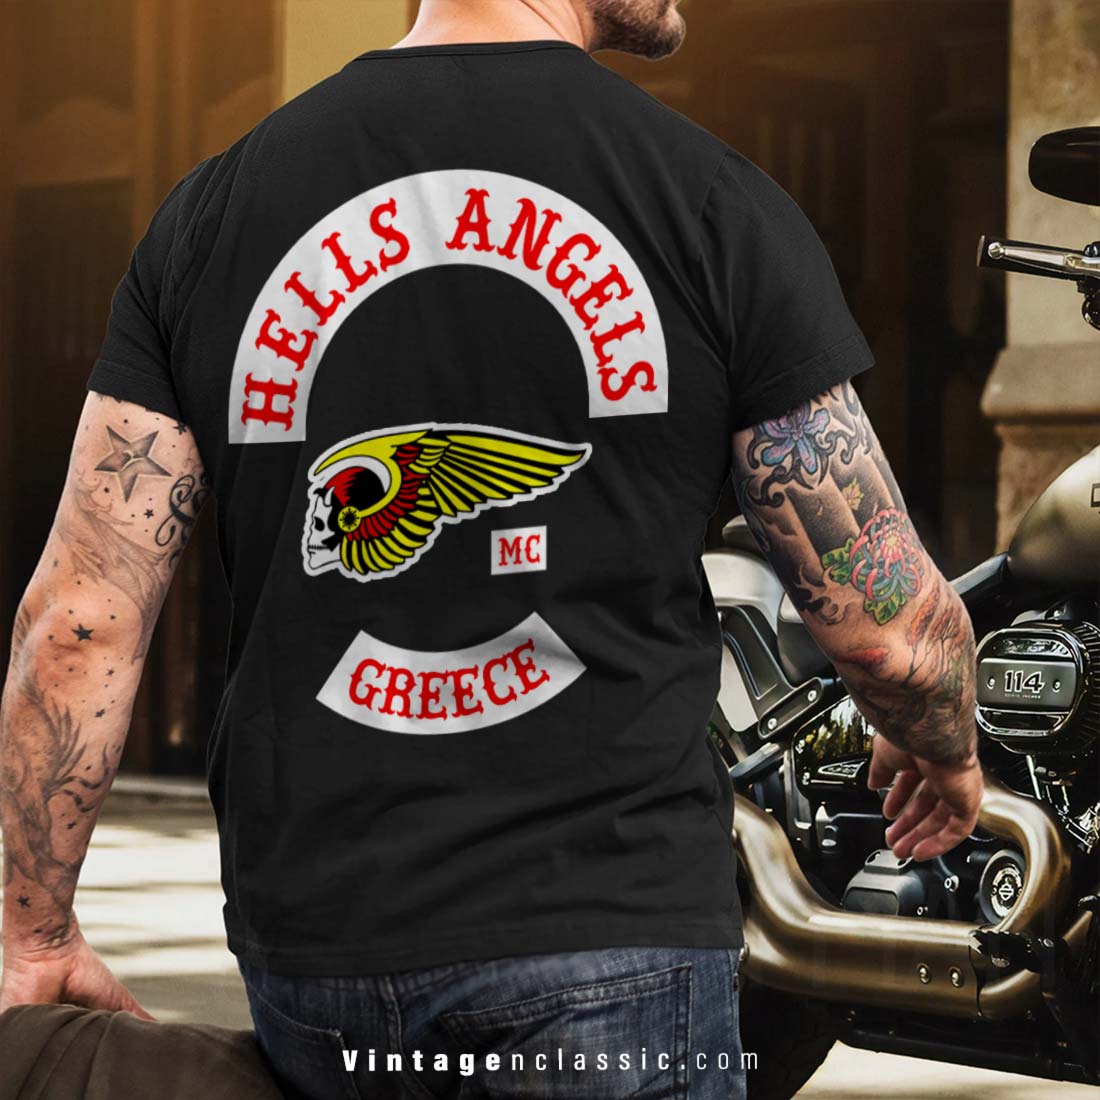 https://vintagenclassic.com/wp-content/uploads/2023/03/Hells-Angels-Mc-Greece-Shirt-back.jpg